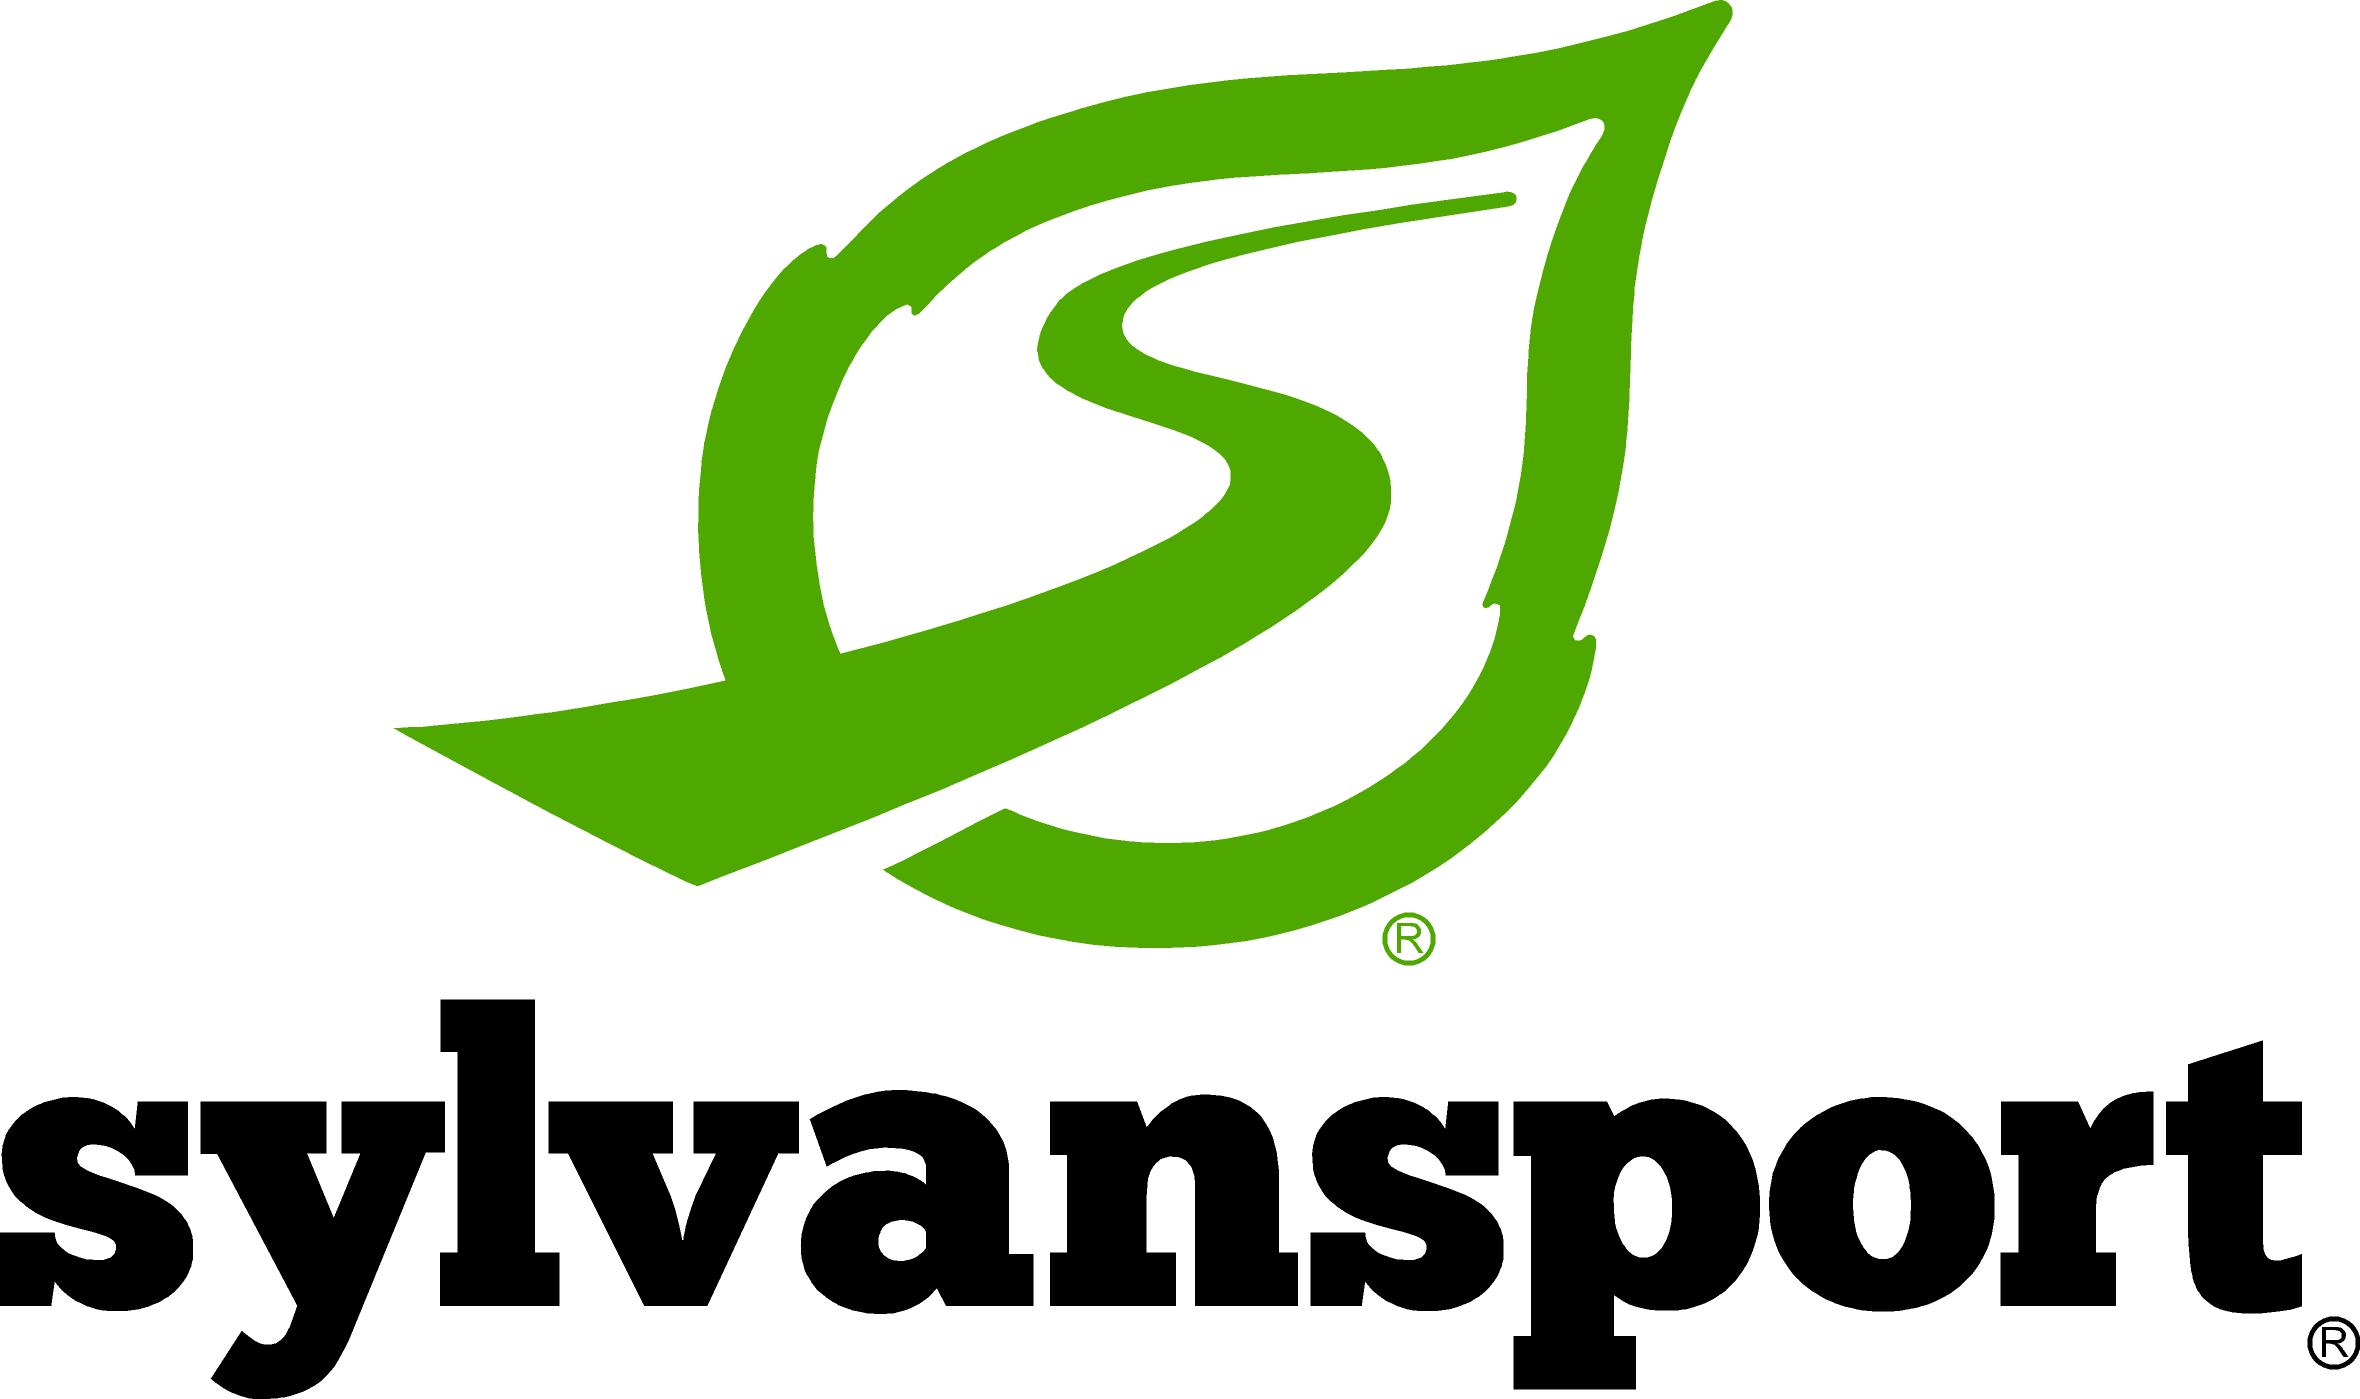 Sylvan Sport logo black and green 1